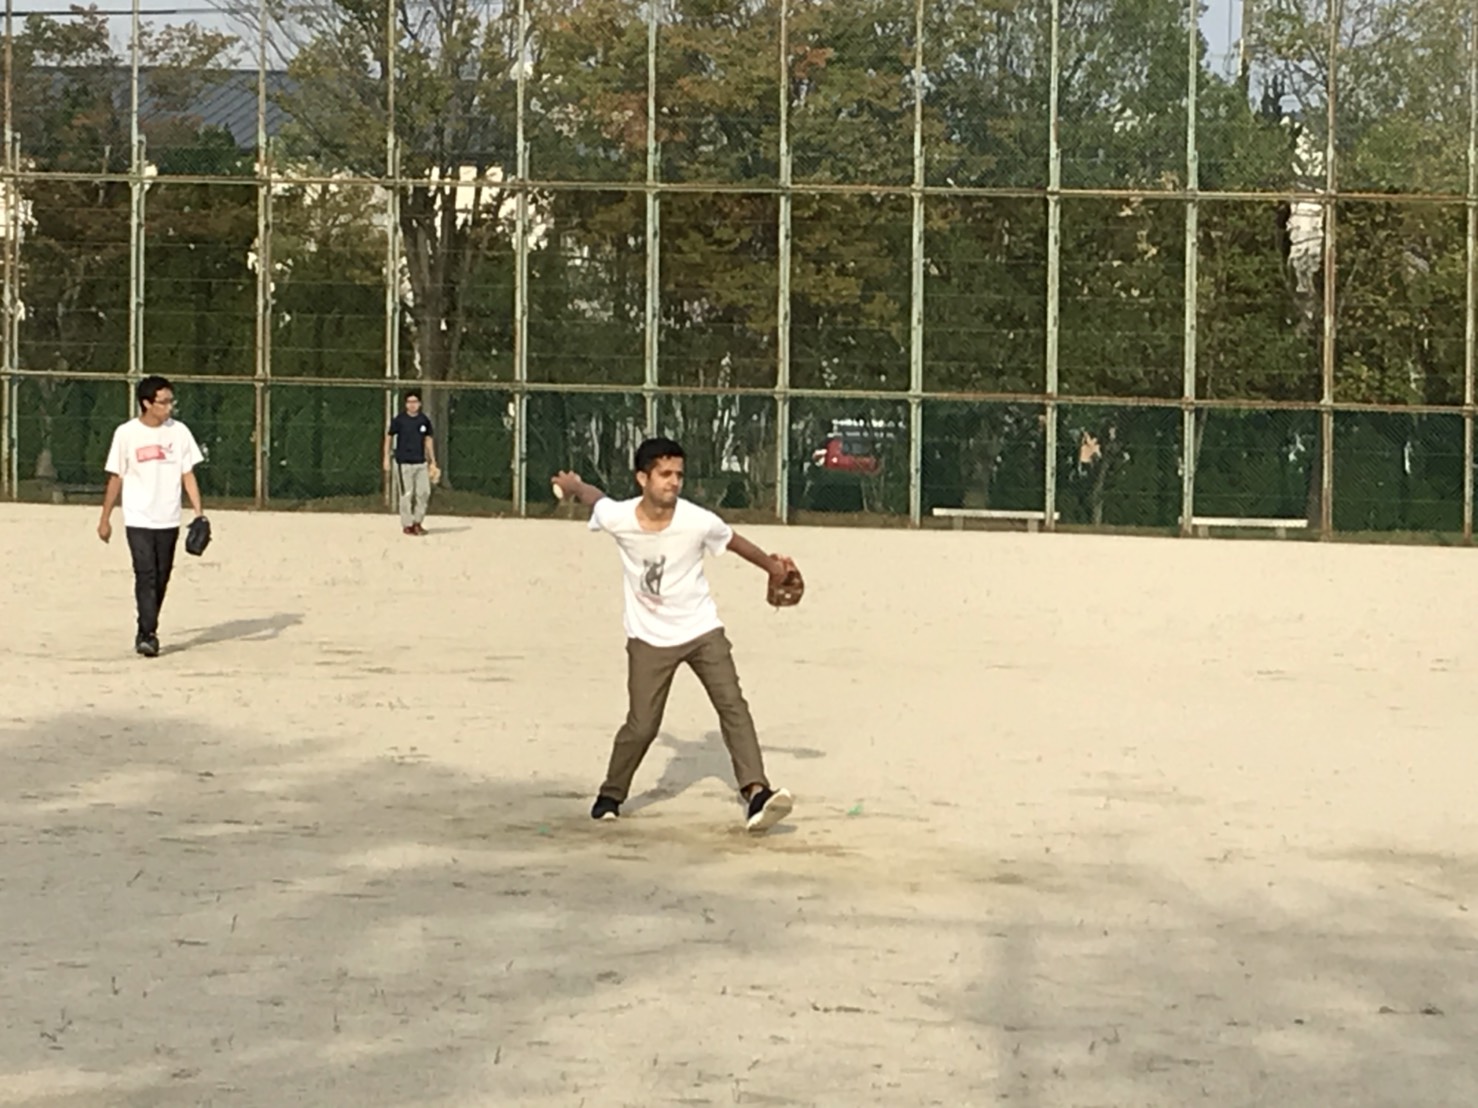 softball2018autumn01.jpg